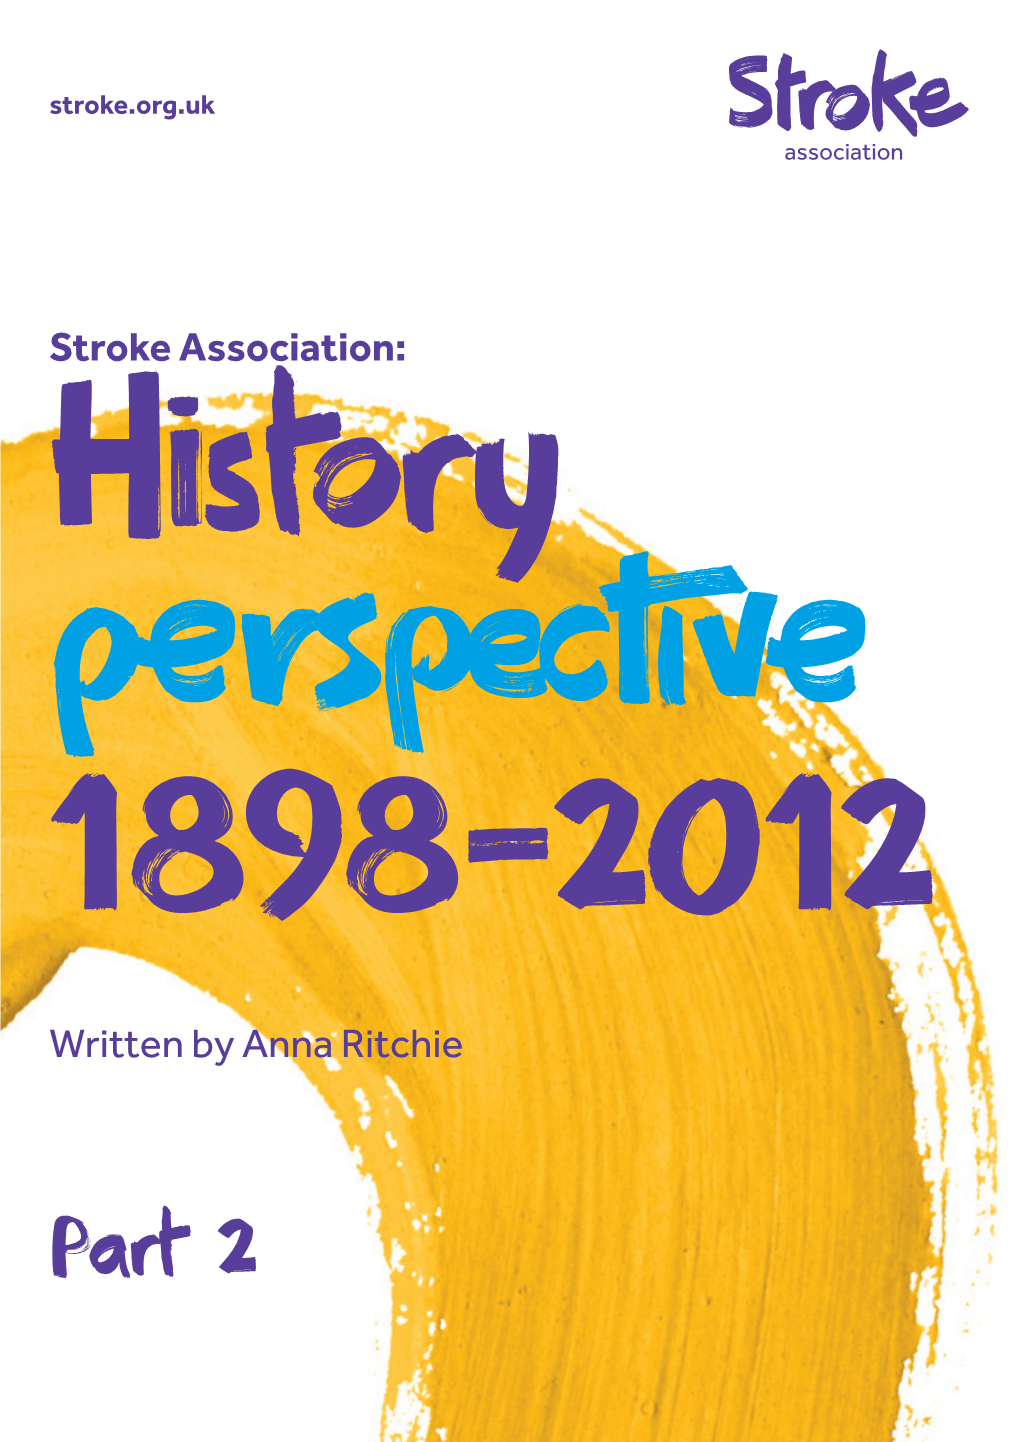 Stroke Association: Historical Perspective 1898